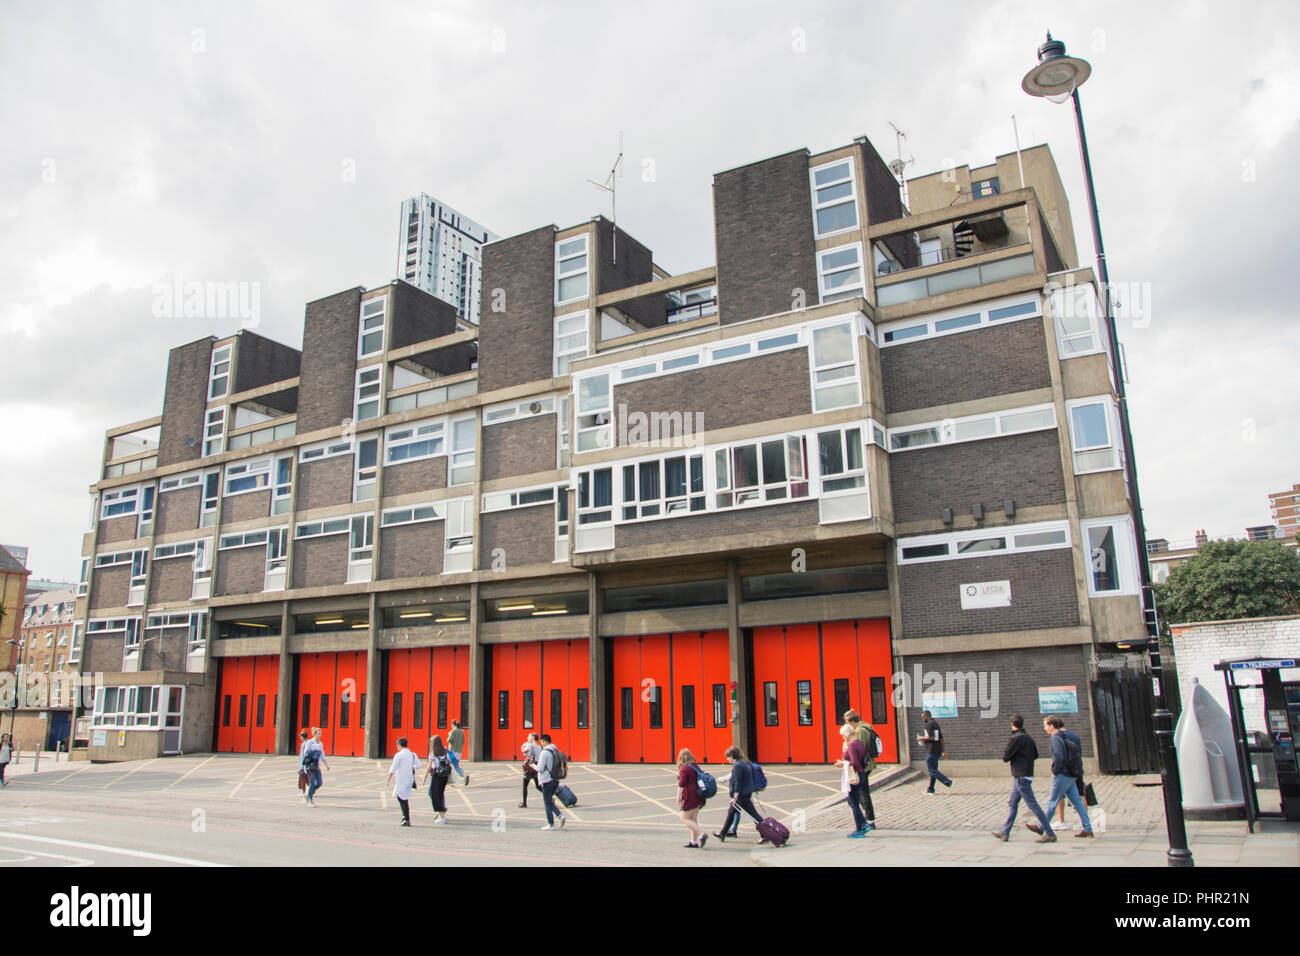 Shoreditch Fire Station, Old Street, Hoxton, London, EC1, UK Banque D'Images